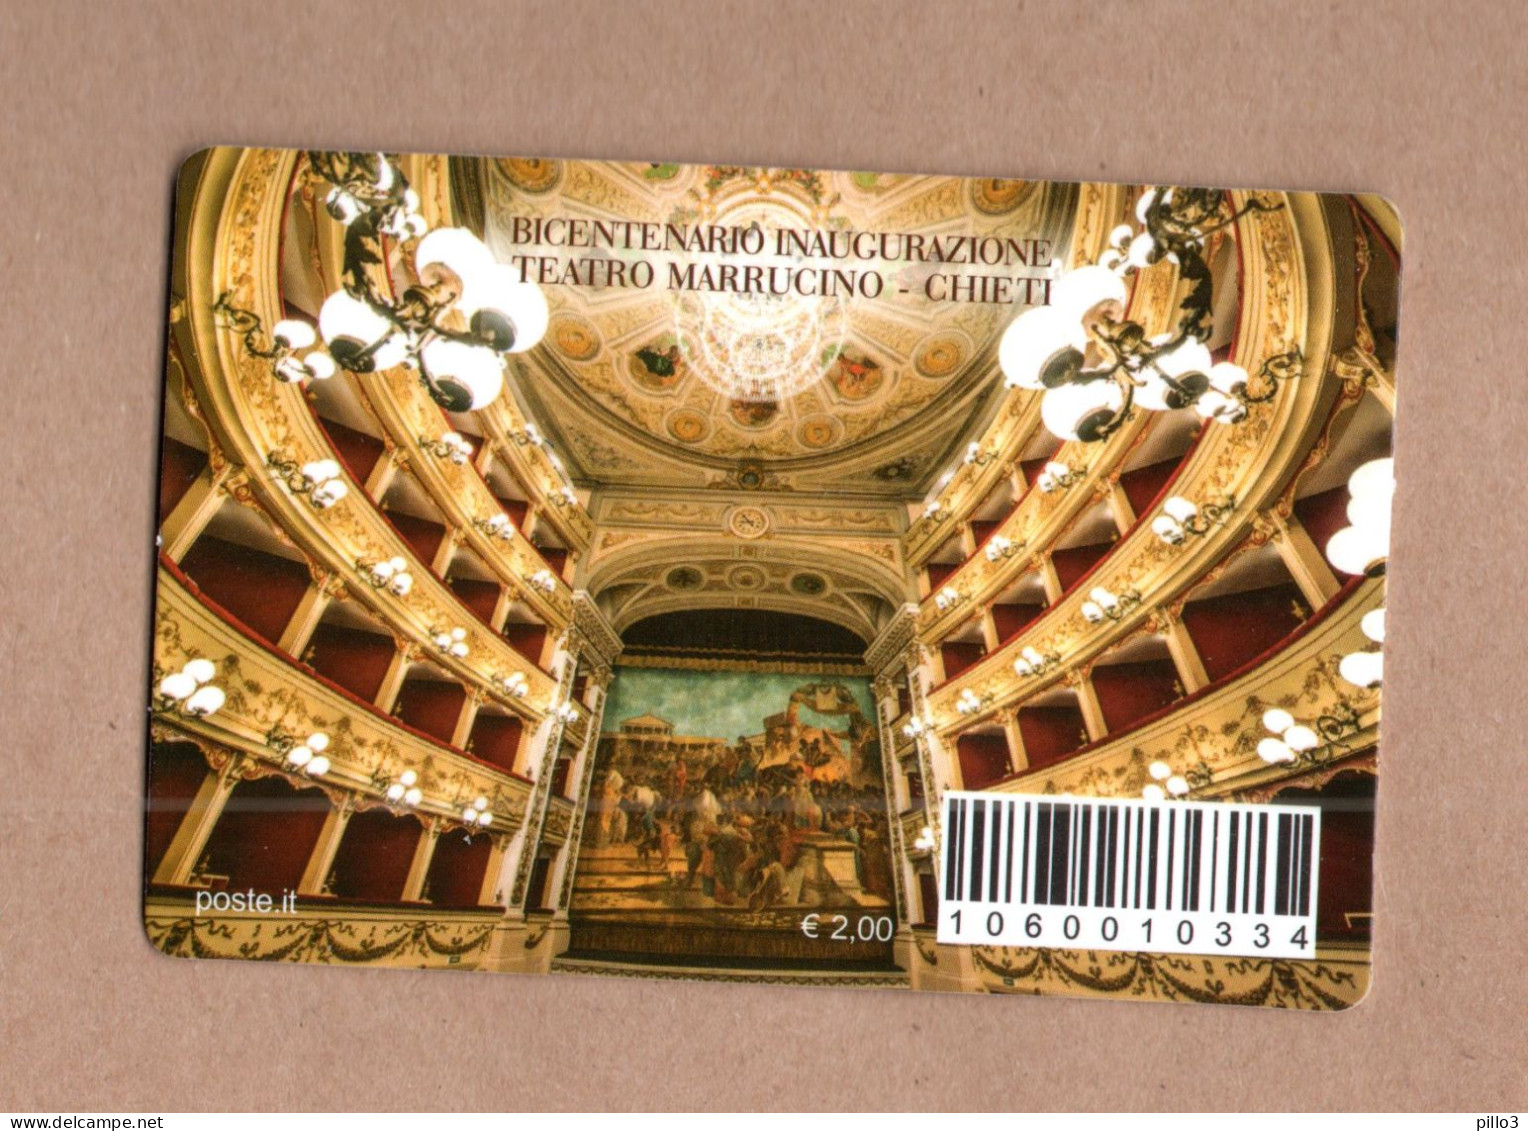 ITALIA - Tessera Filatelica : Teatro Marrucino - Chieti   11.05.2018 - Philatelistische Karten